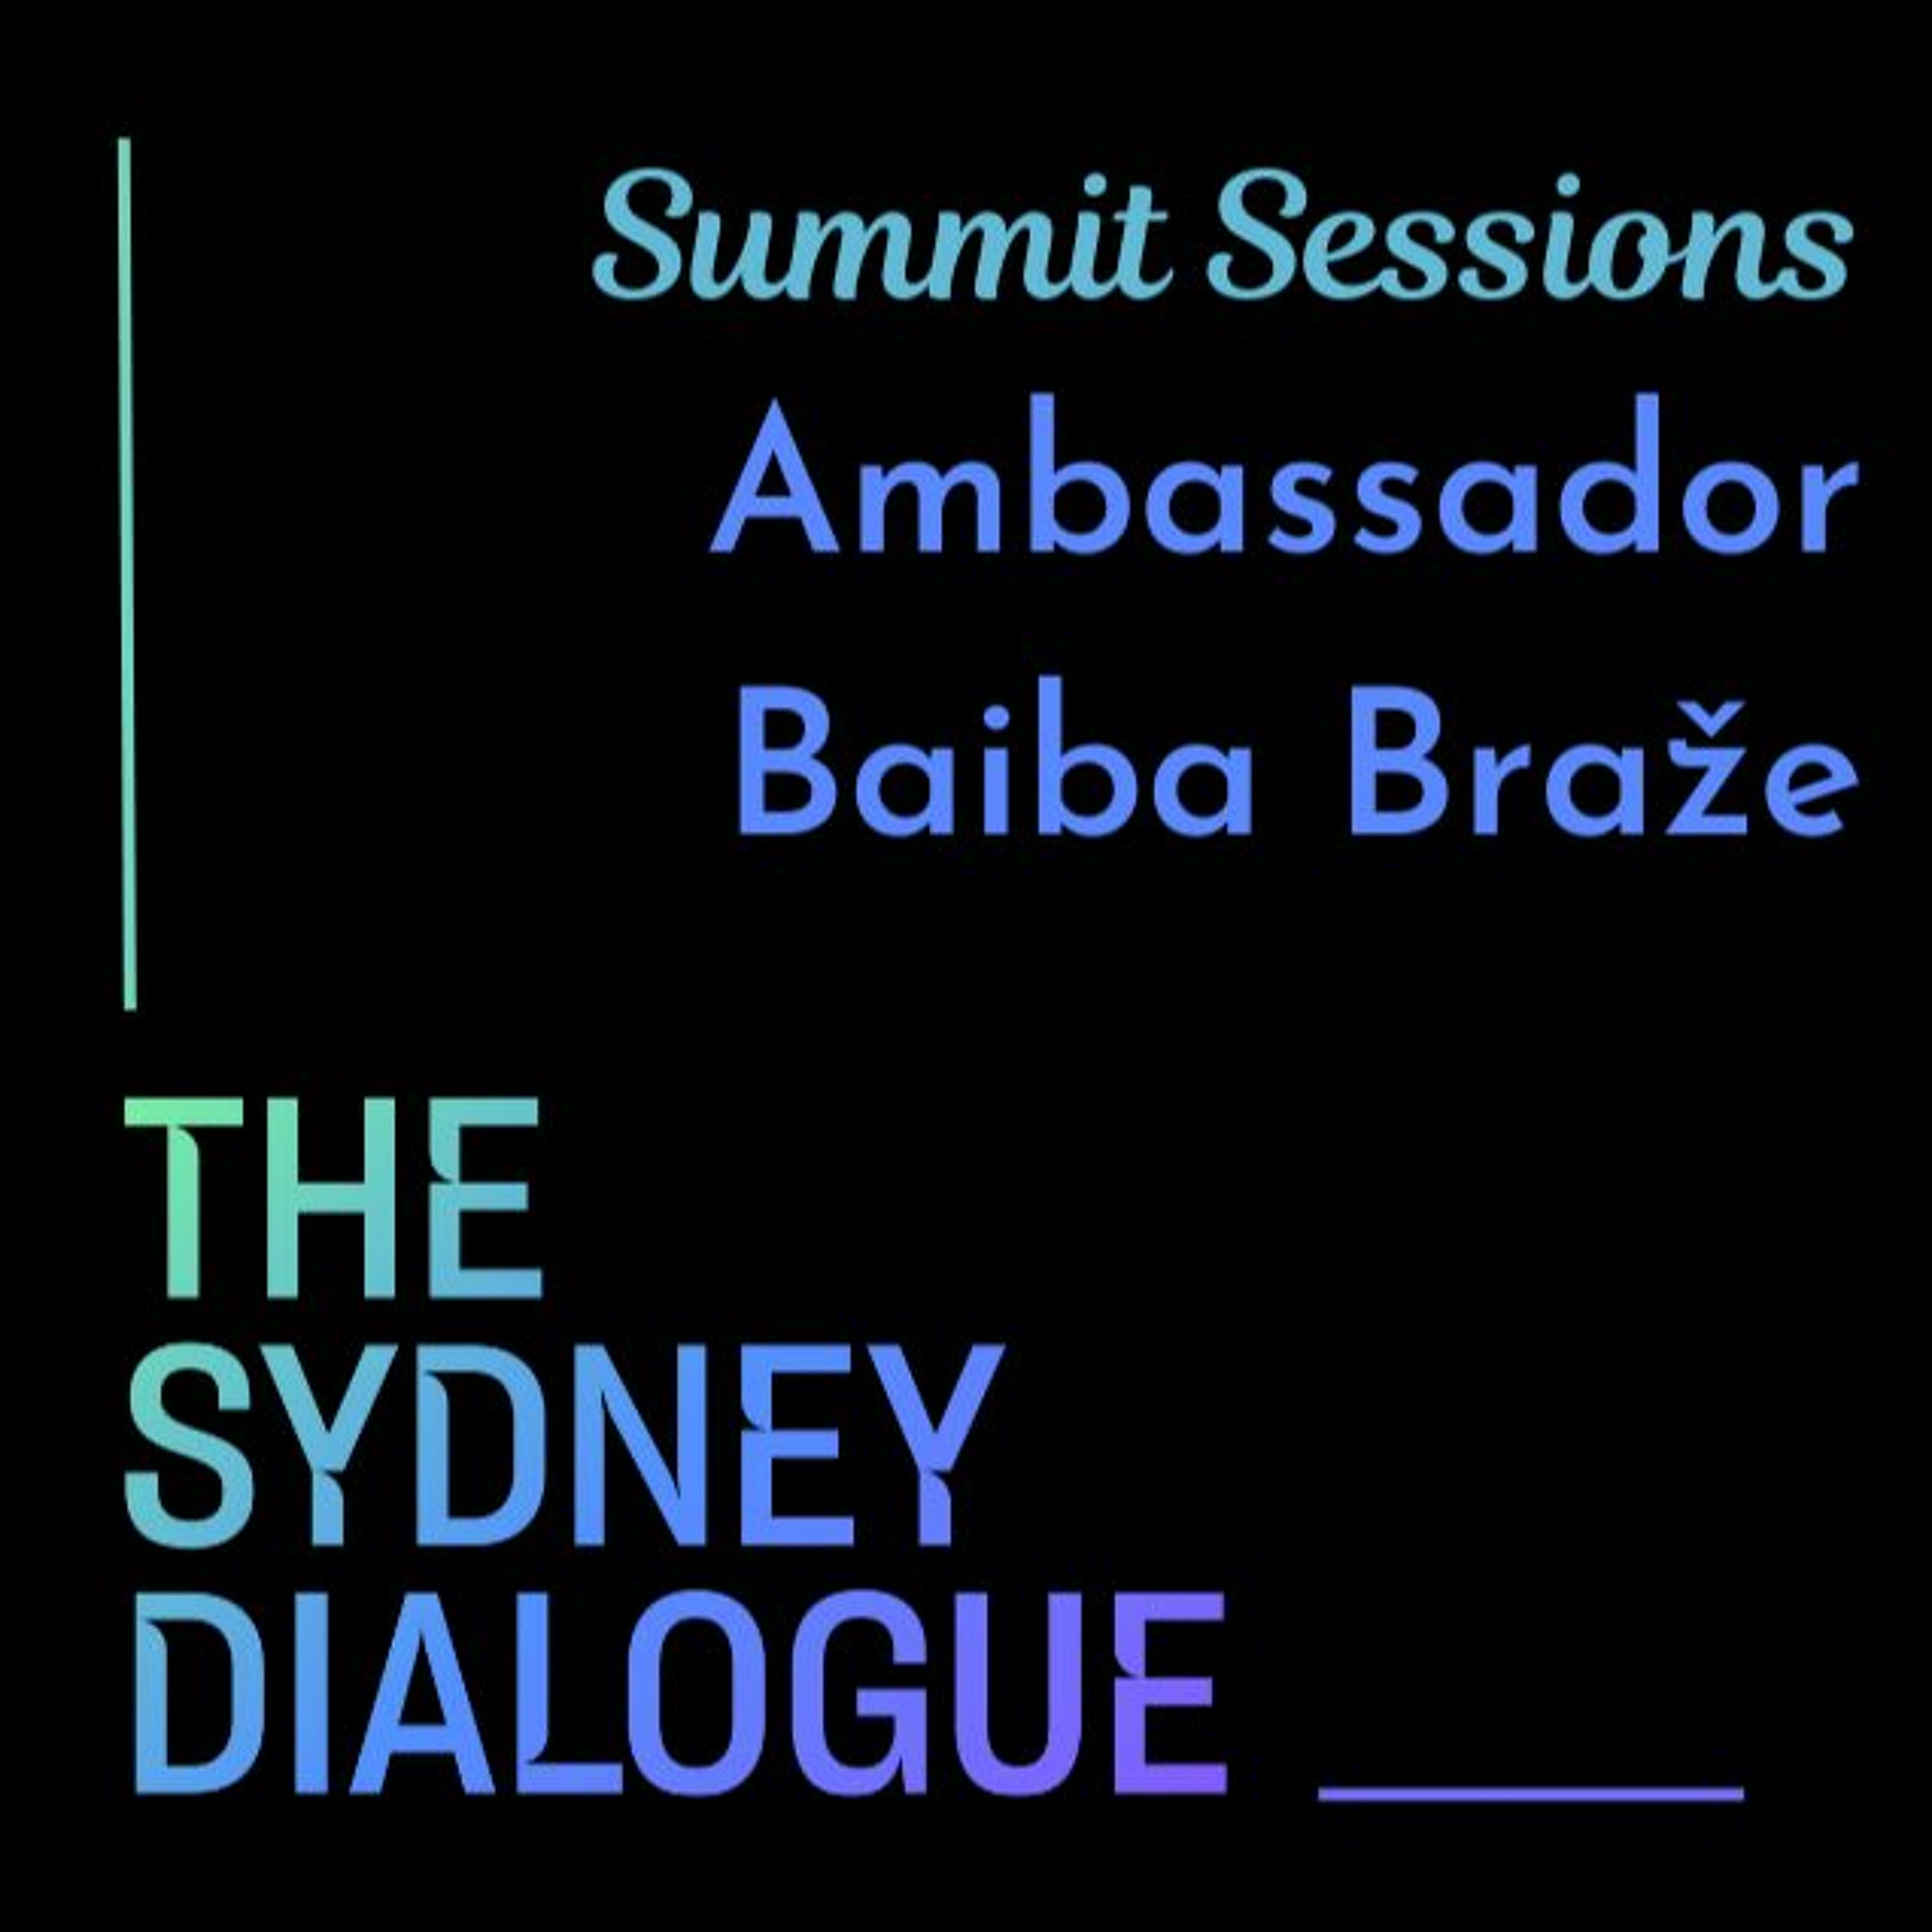 The Sydney Dialogue Summit Sessions: Ambassador Baiba Braže